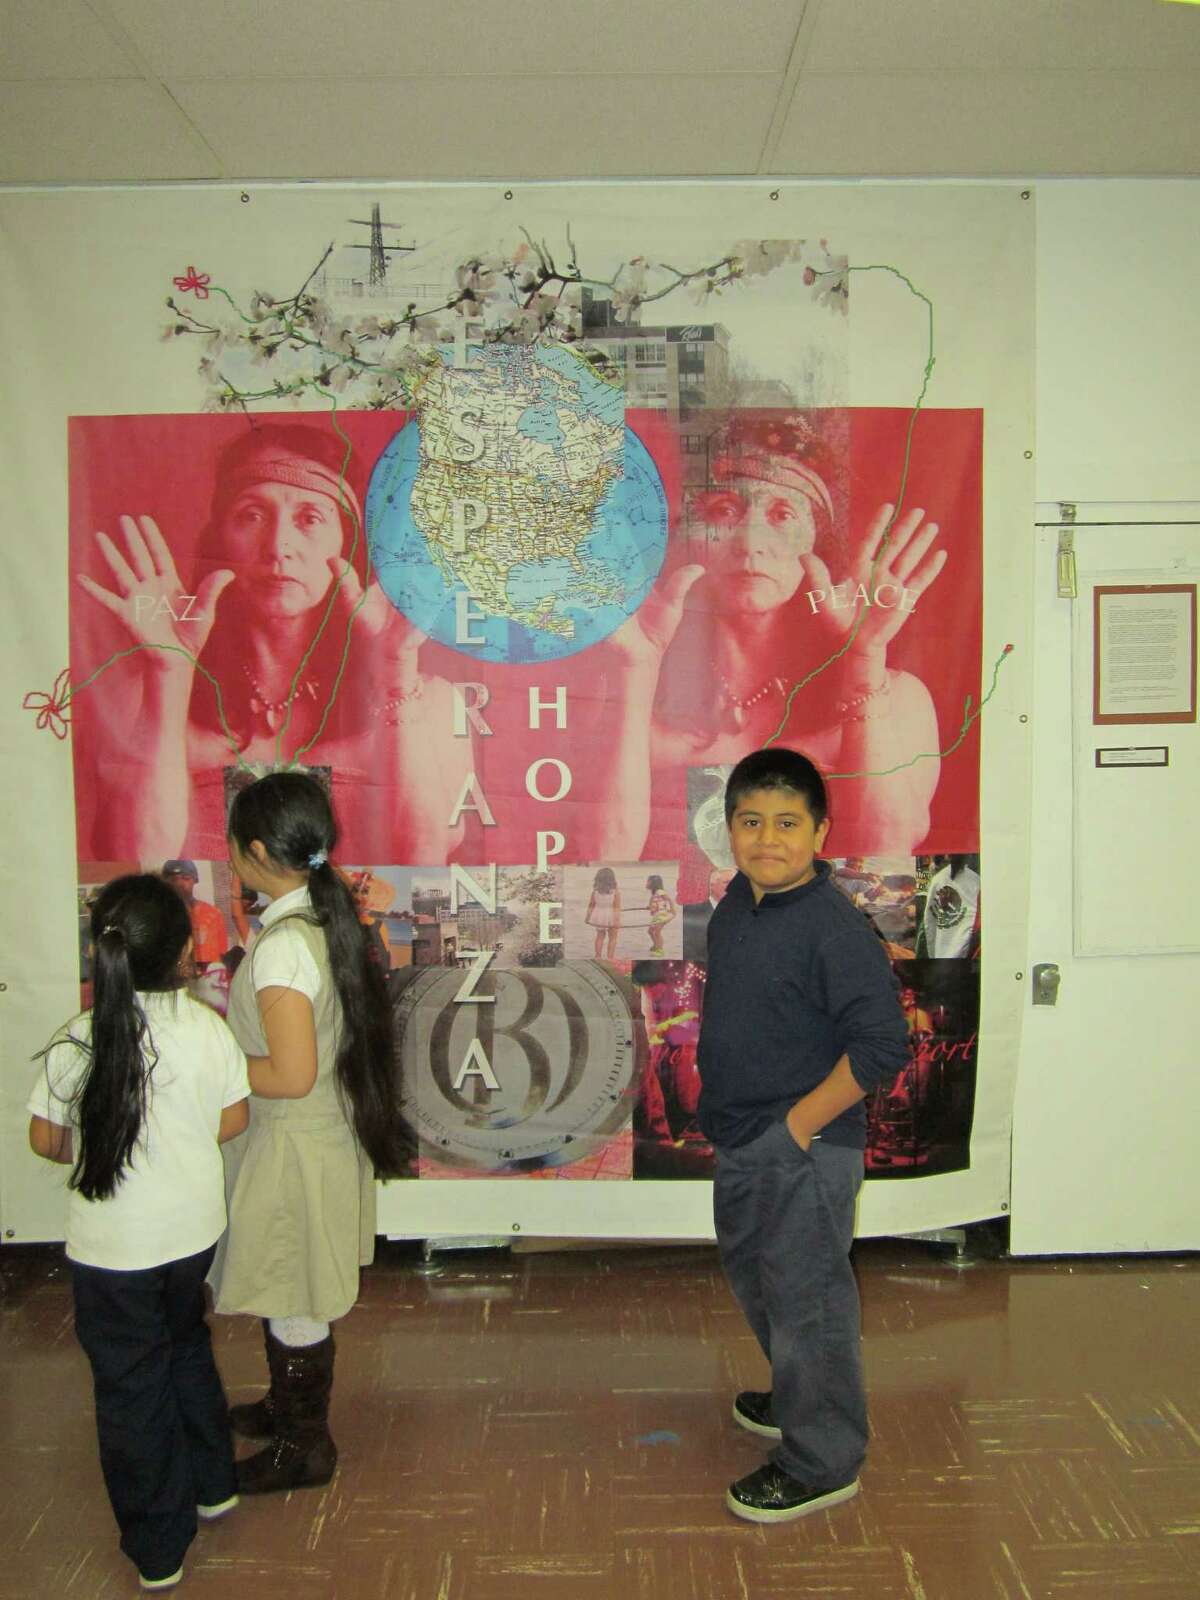 A group of Roosevelt School students view a mural banner by Bridgeport artist Yolanda Petrocelli in the school's art gallery.